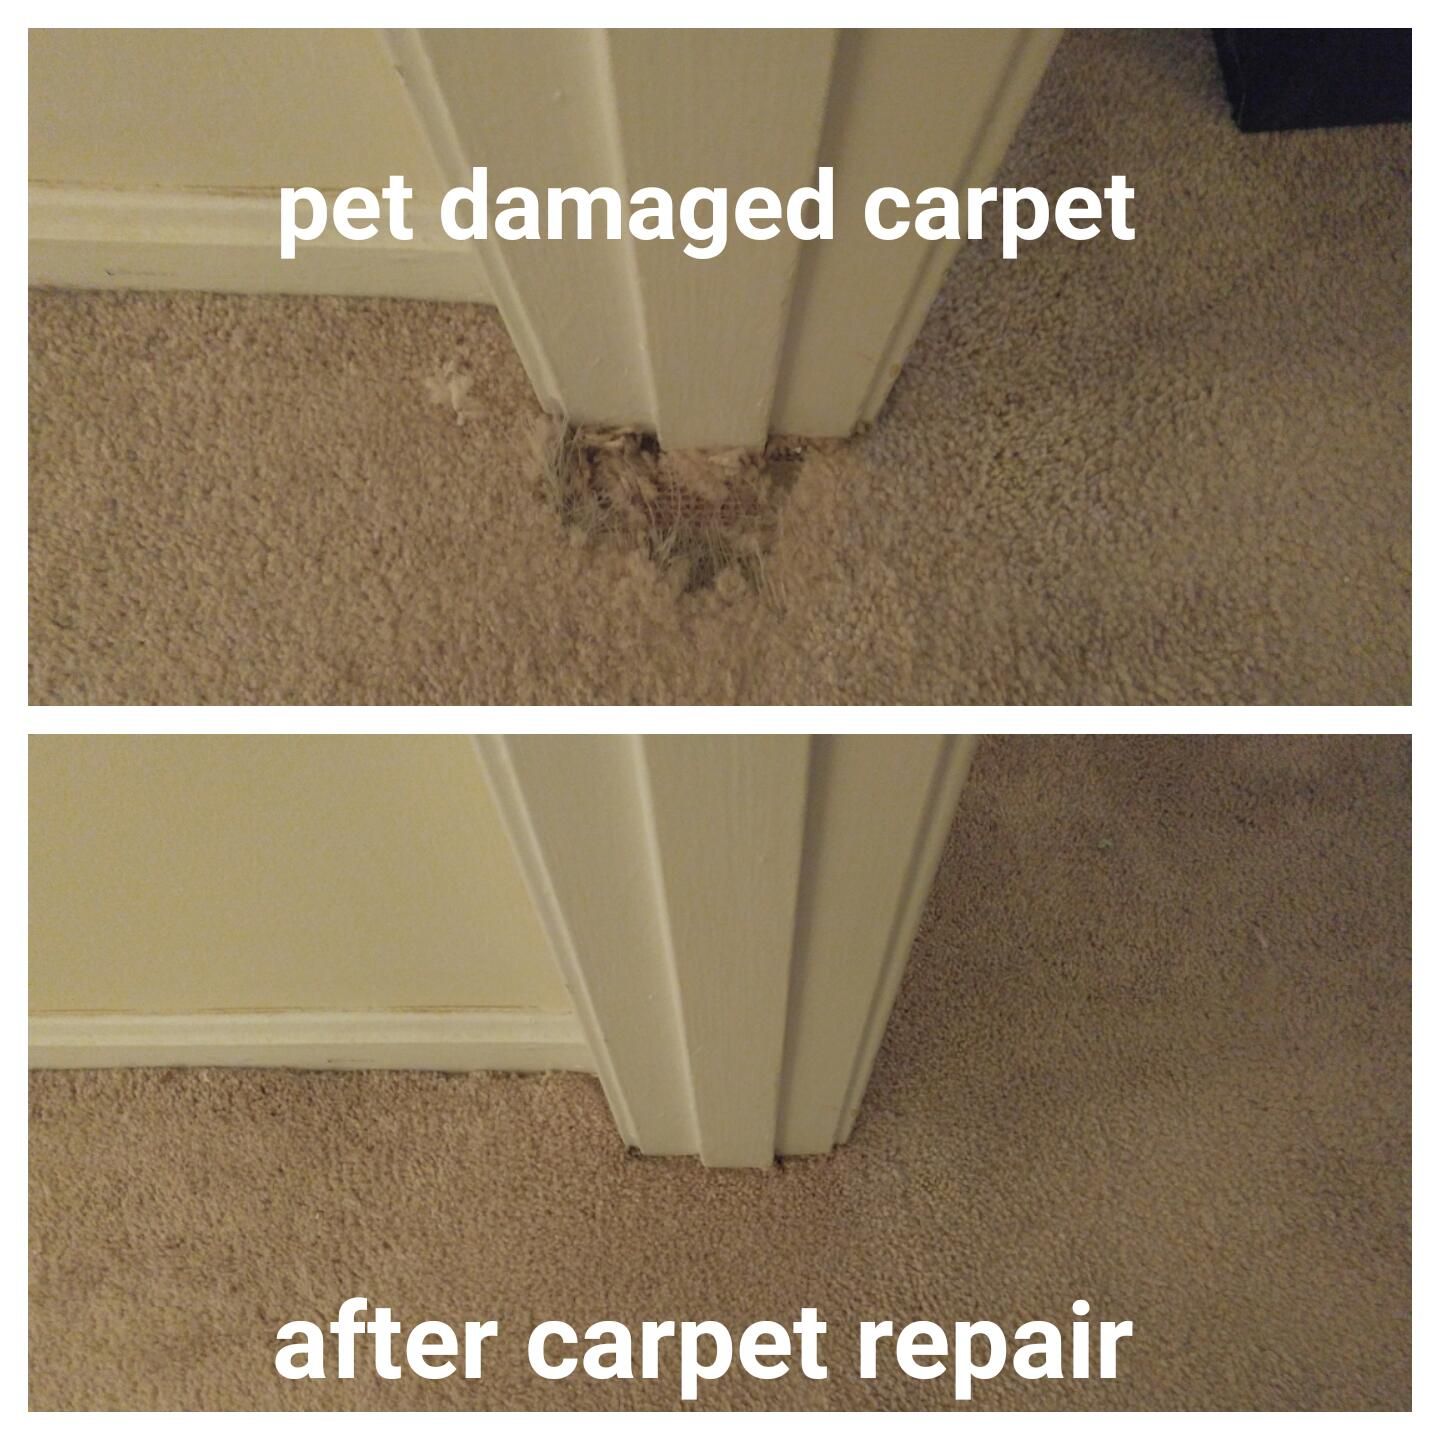 Pet damaged carpet repair in Middlesbrough